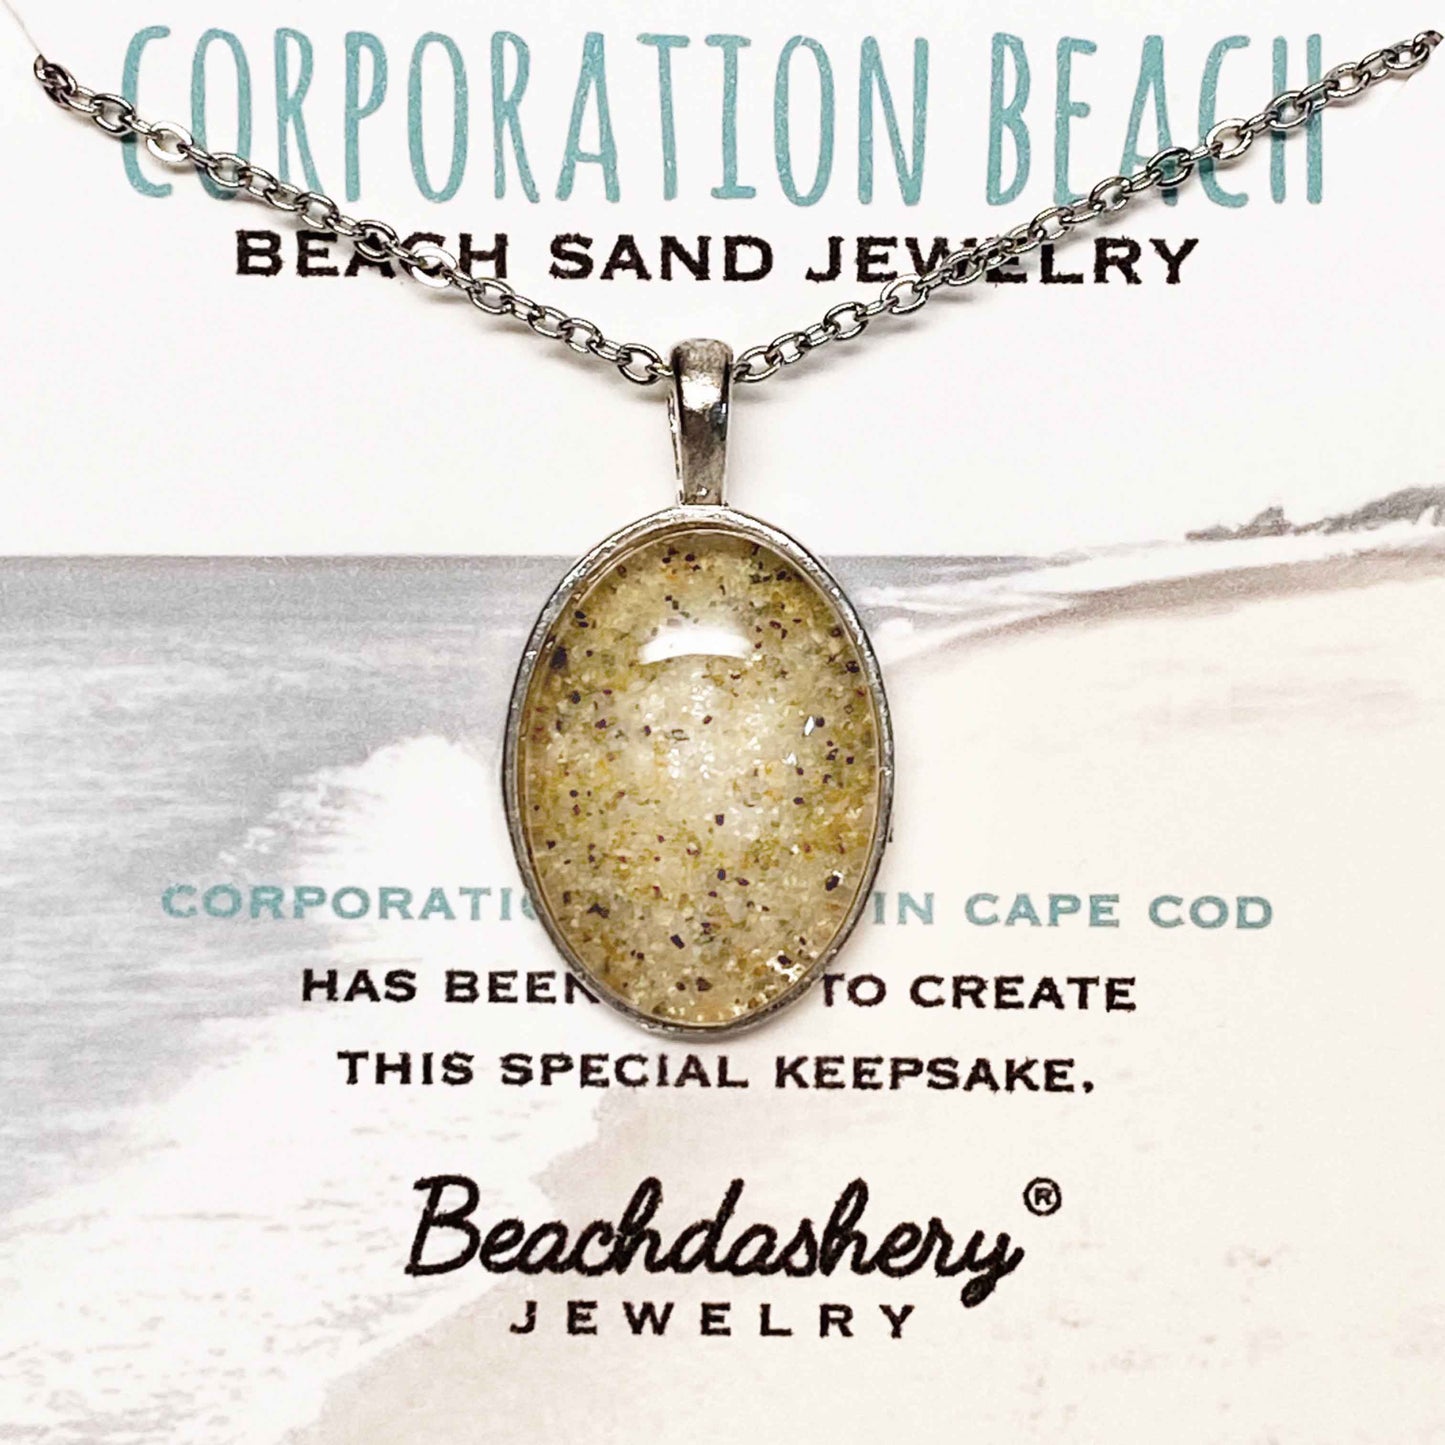 Corporation Beach Sand Jewelry Beachdashery® Jewelry